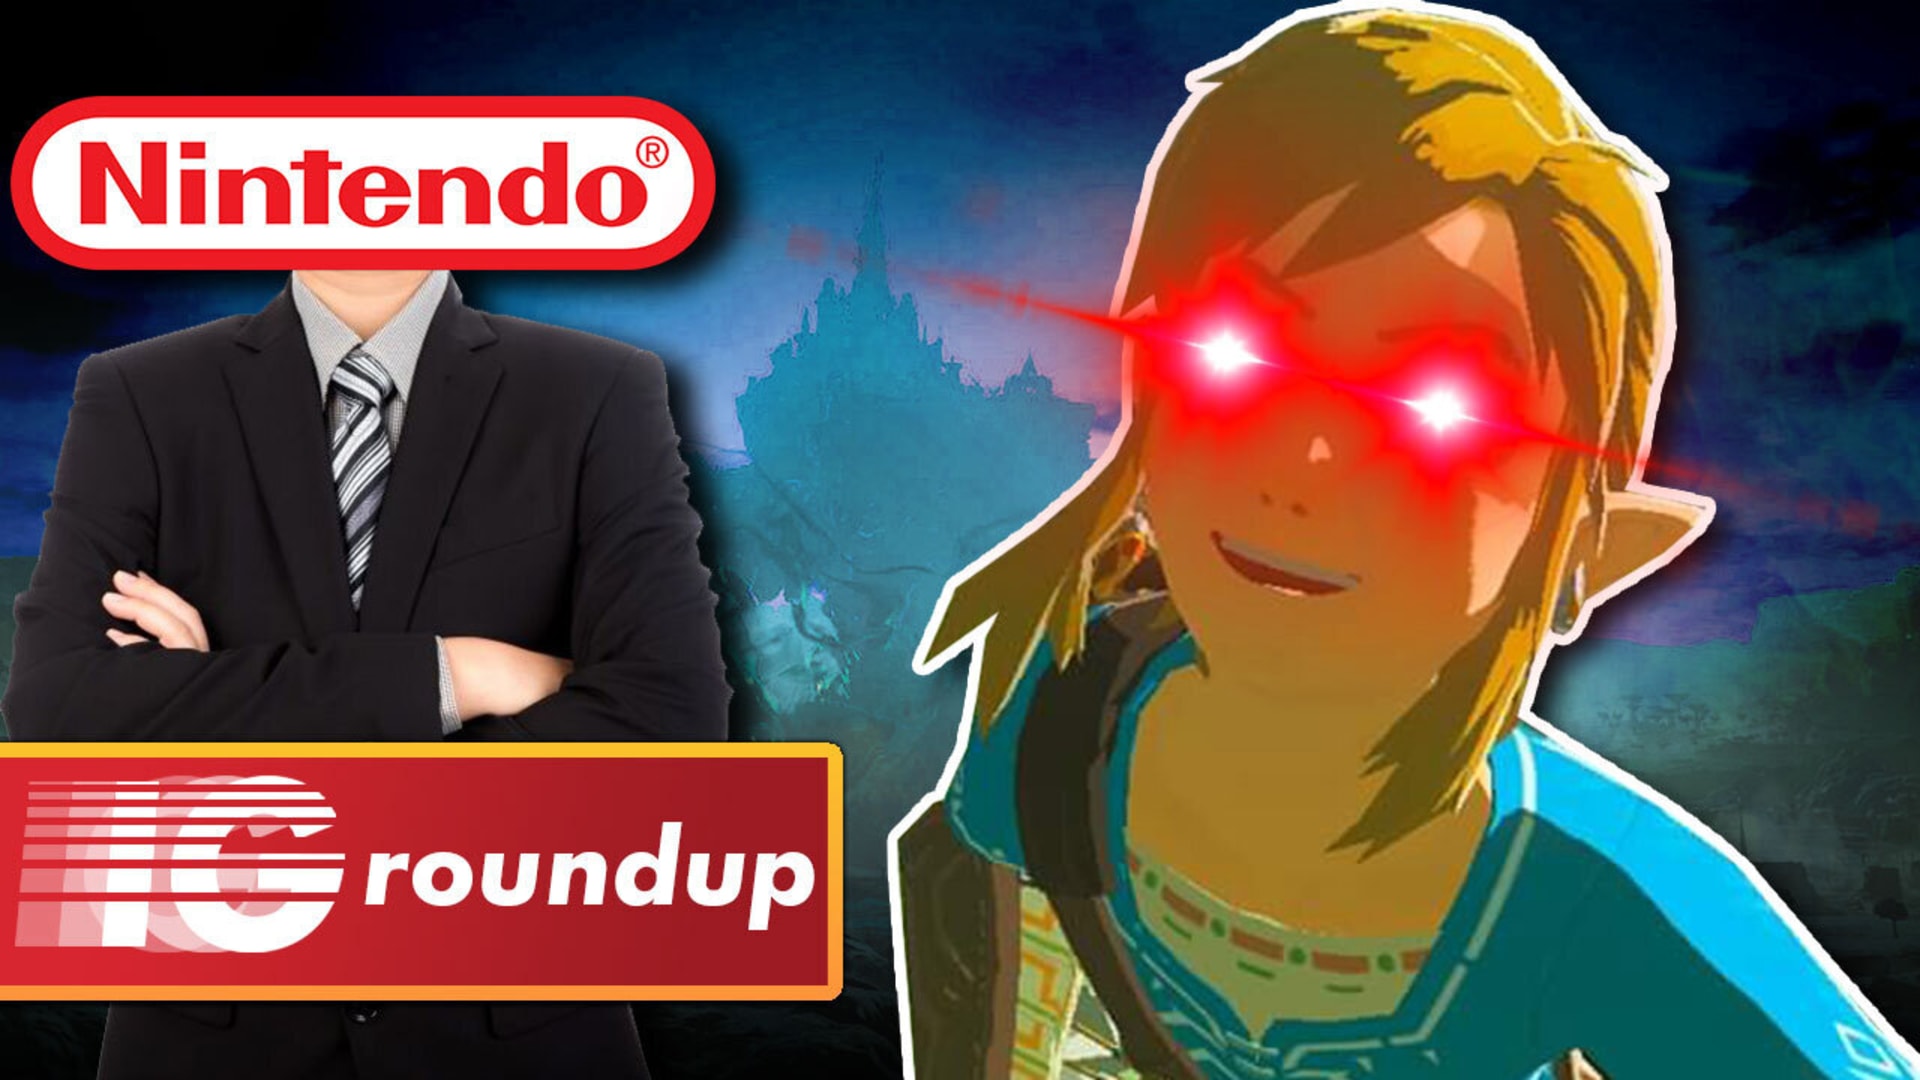 Zelda TOTK Link Realistic Hoodie